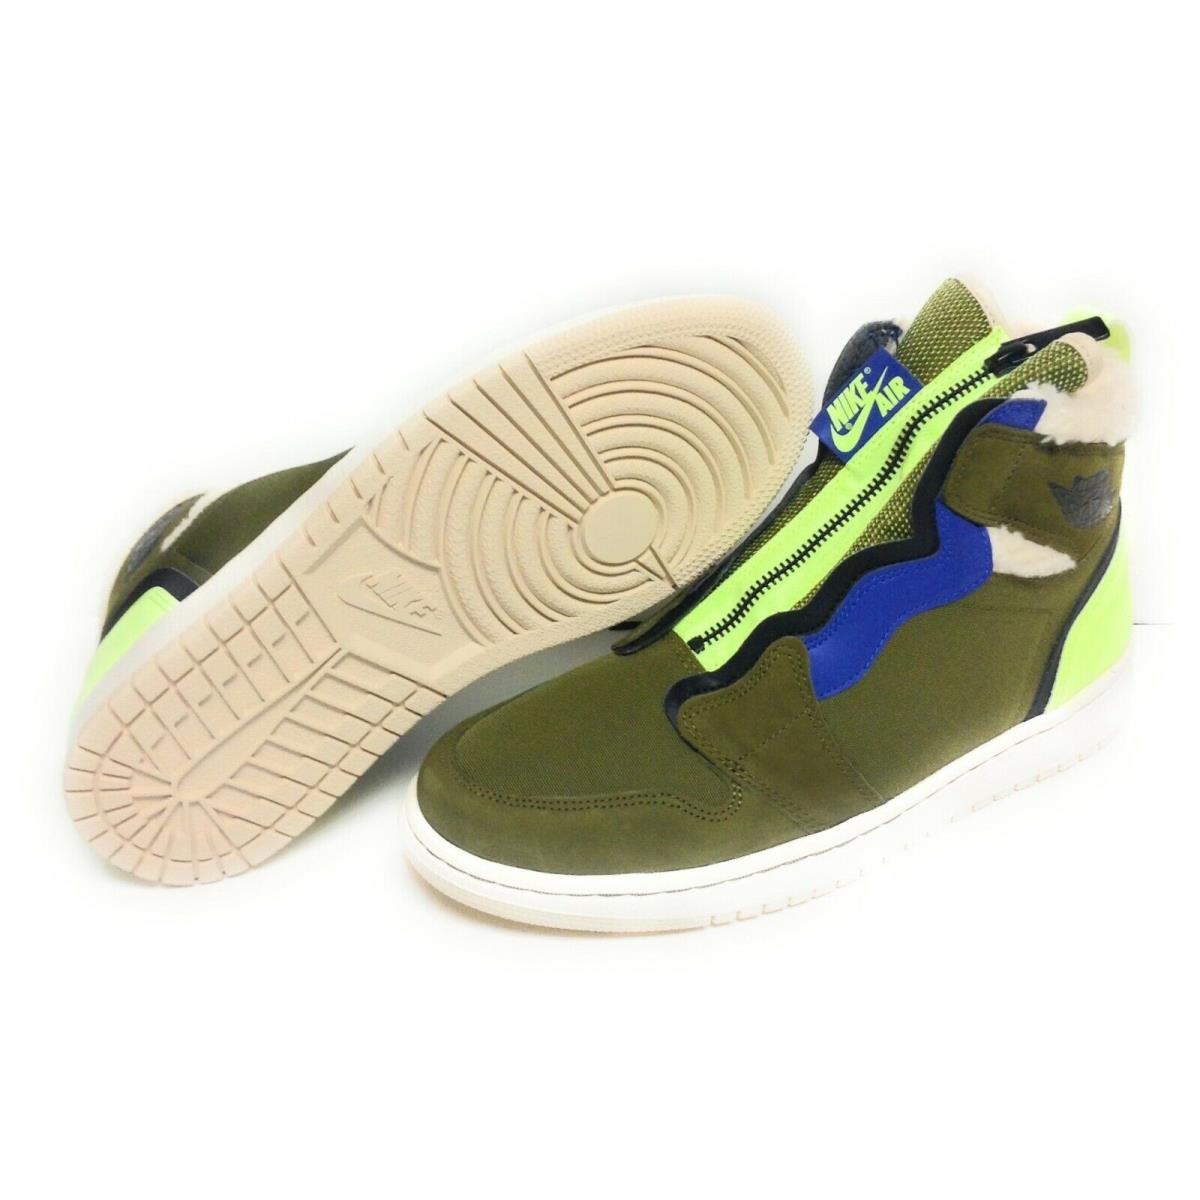 Womens Nike Air Jordan 1 High Zip Up AV3723 300 Olive Volt Green Sneakers Shoes